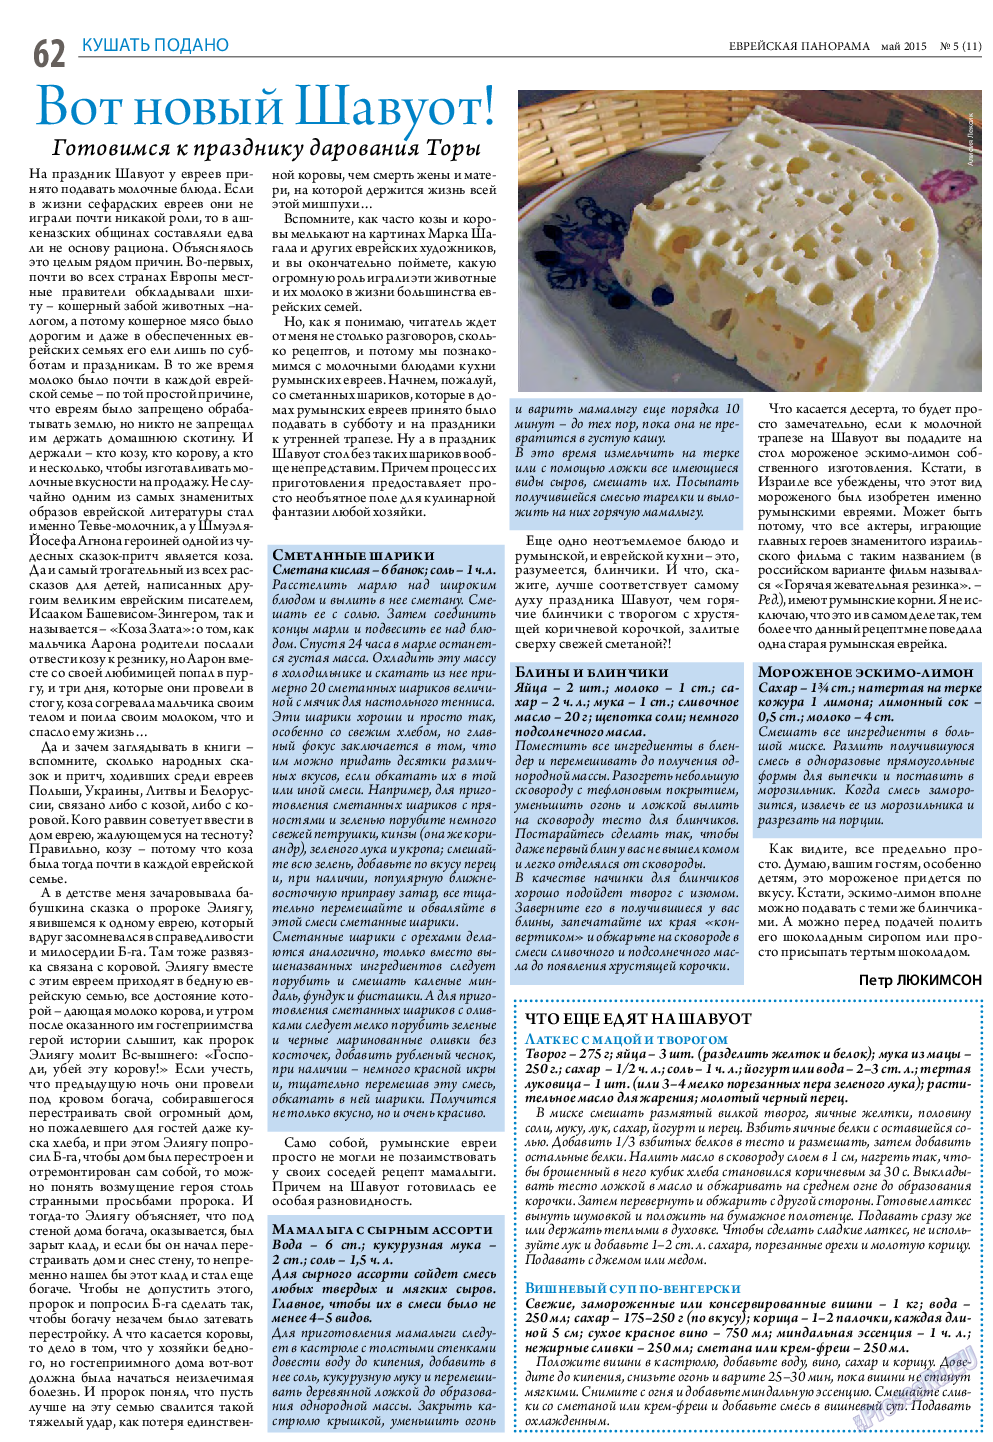 Еврейская панорама, газета. 2015 №5 стр.62